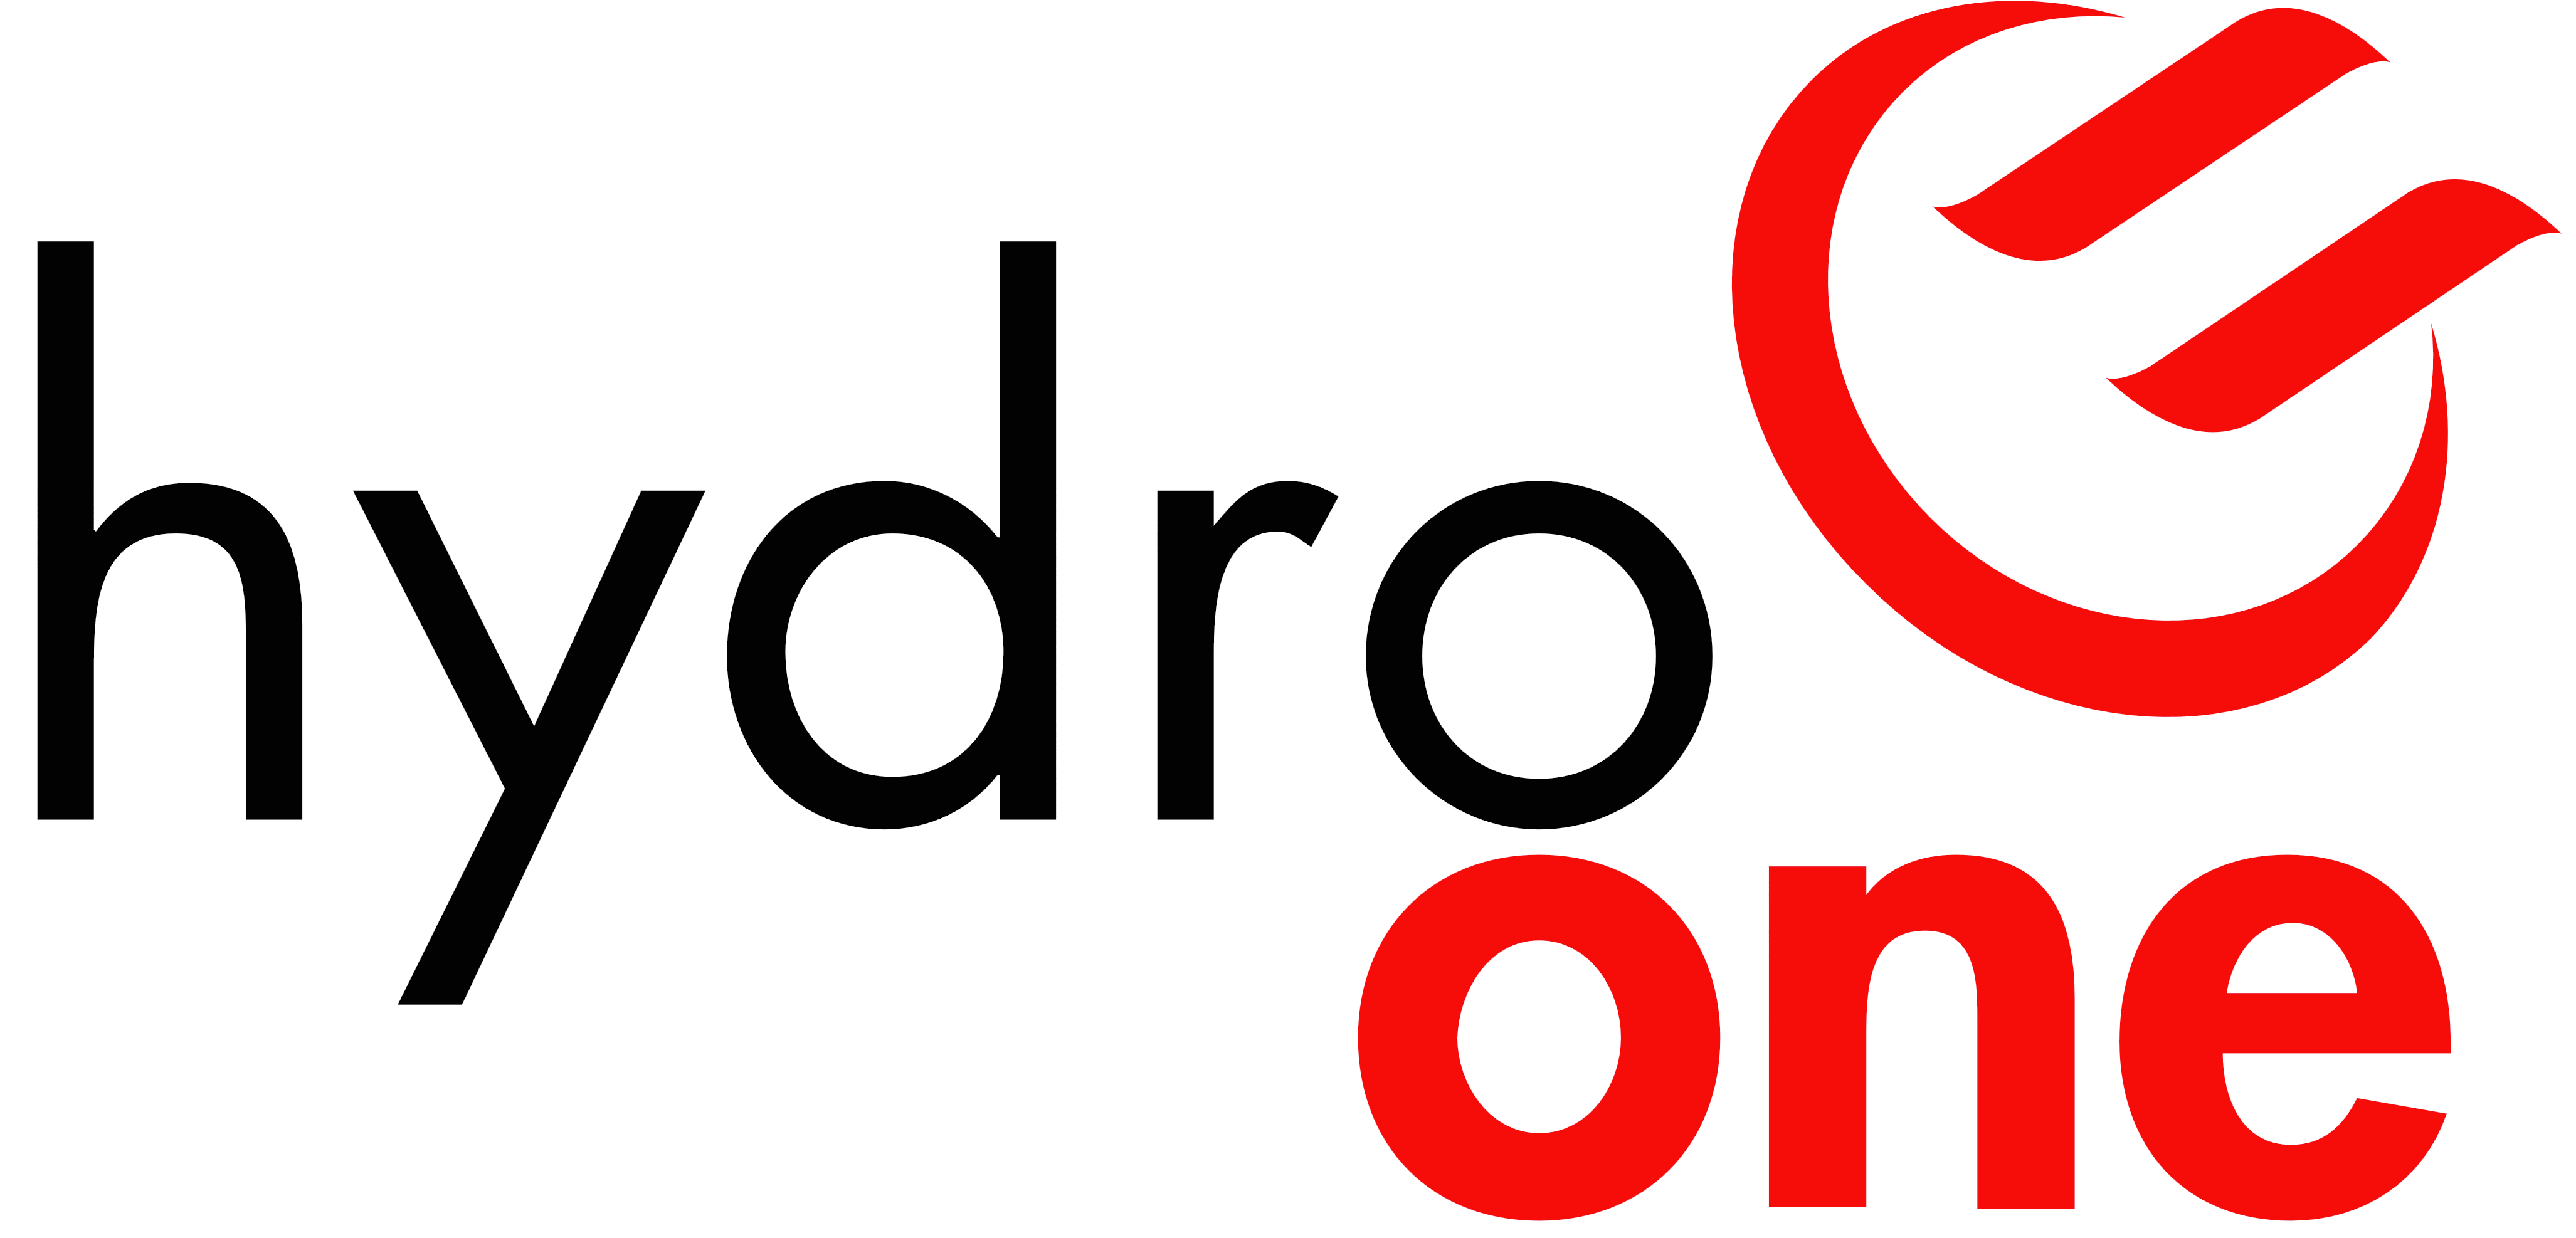 Onelogos Logo - Hydro One – Logos Download